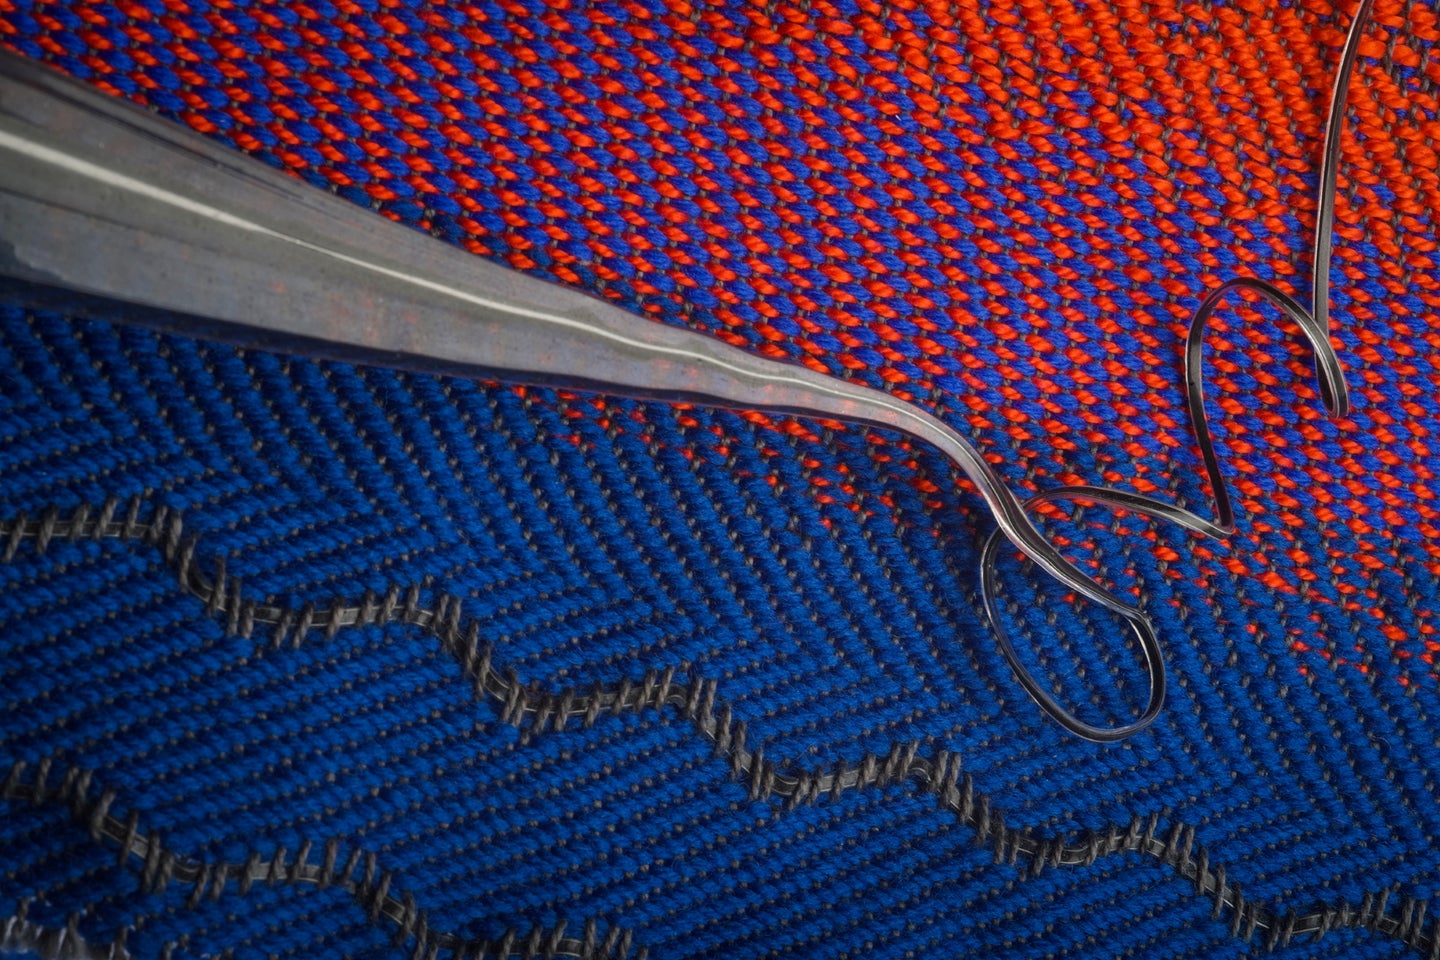 A piezoelectric thread woven into regular fabric